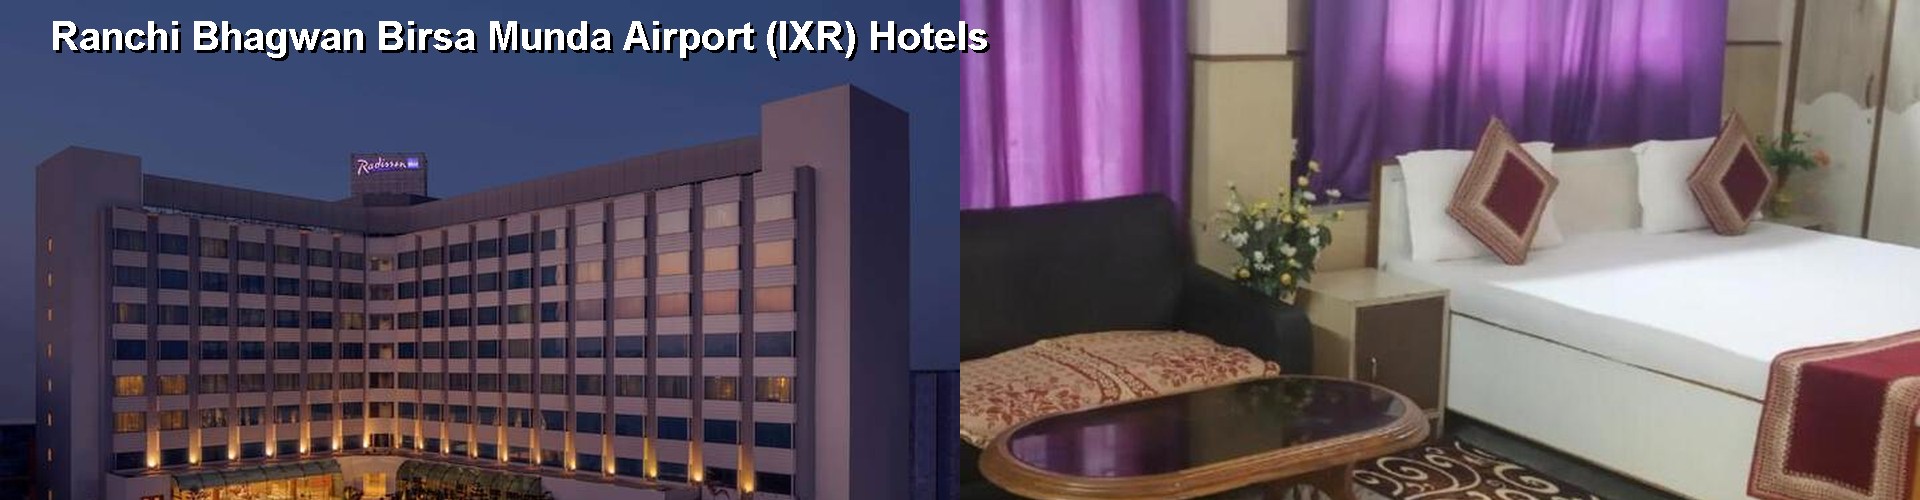 4 Best Hotels near Ranchi Bhagwan Birsa Munda Airport (IXR)